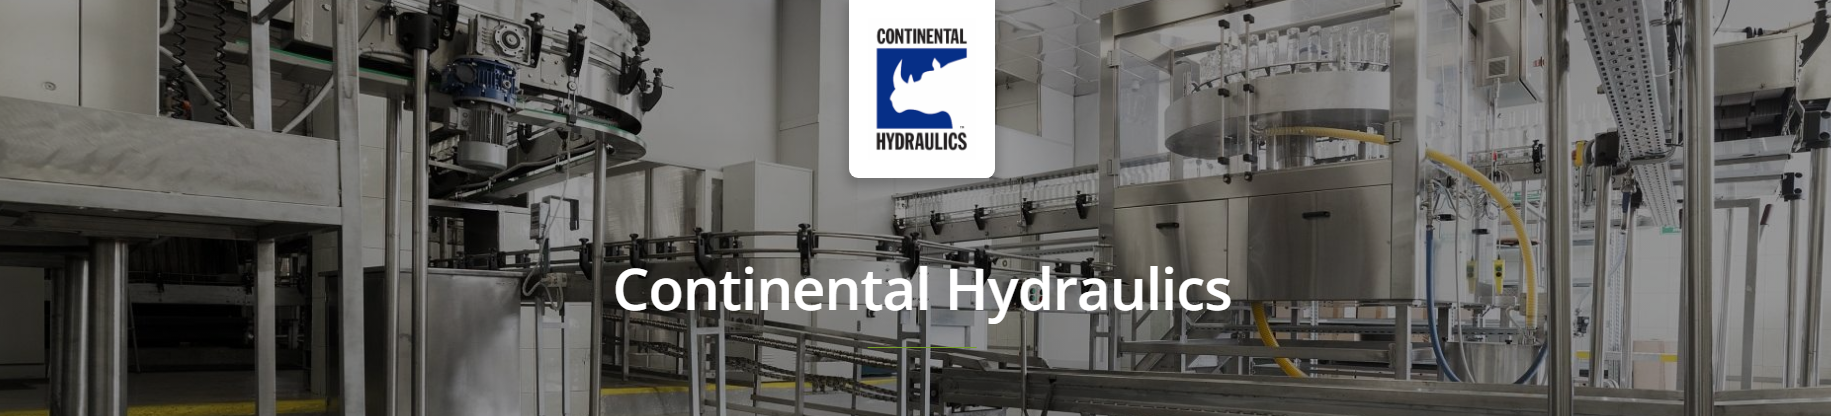 Continental Hydraulics Modular Stack Valves